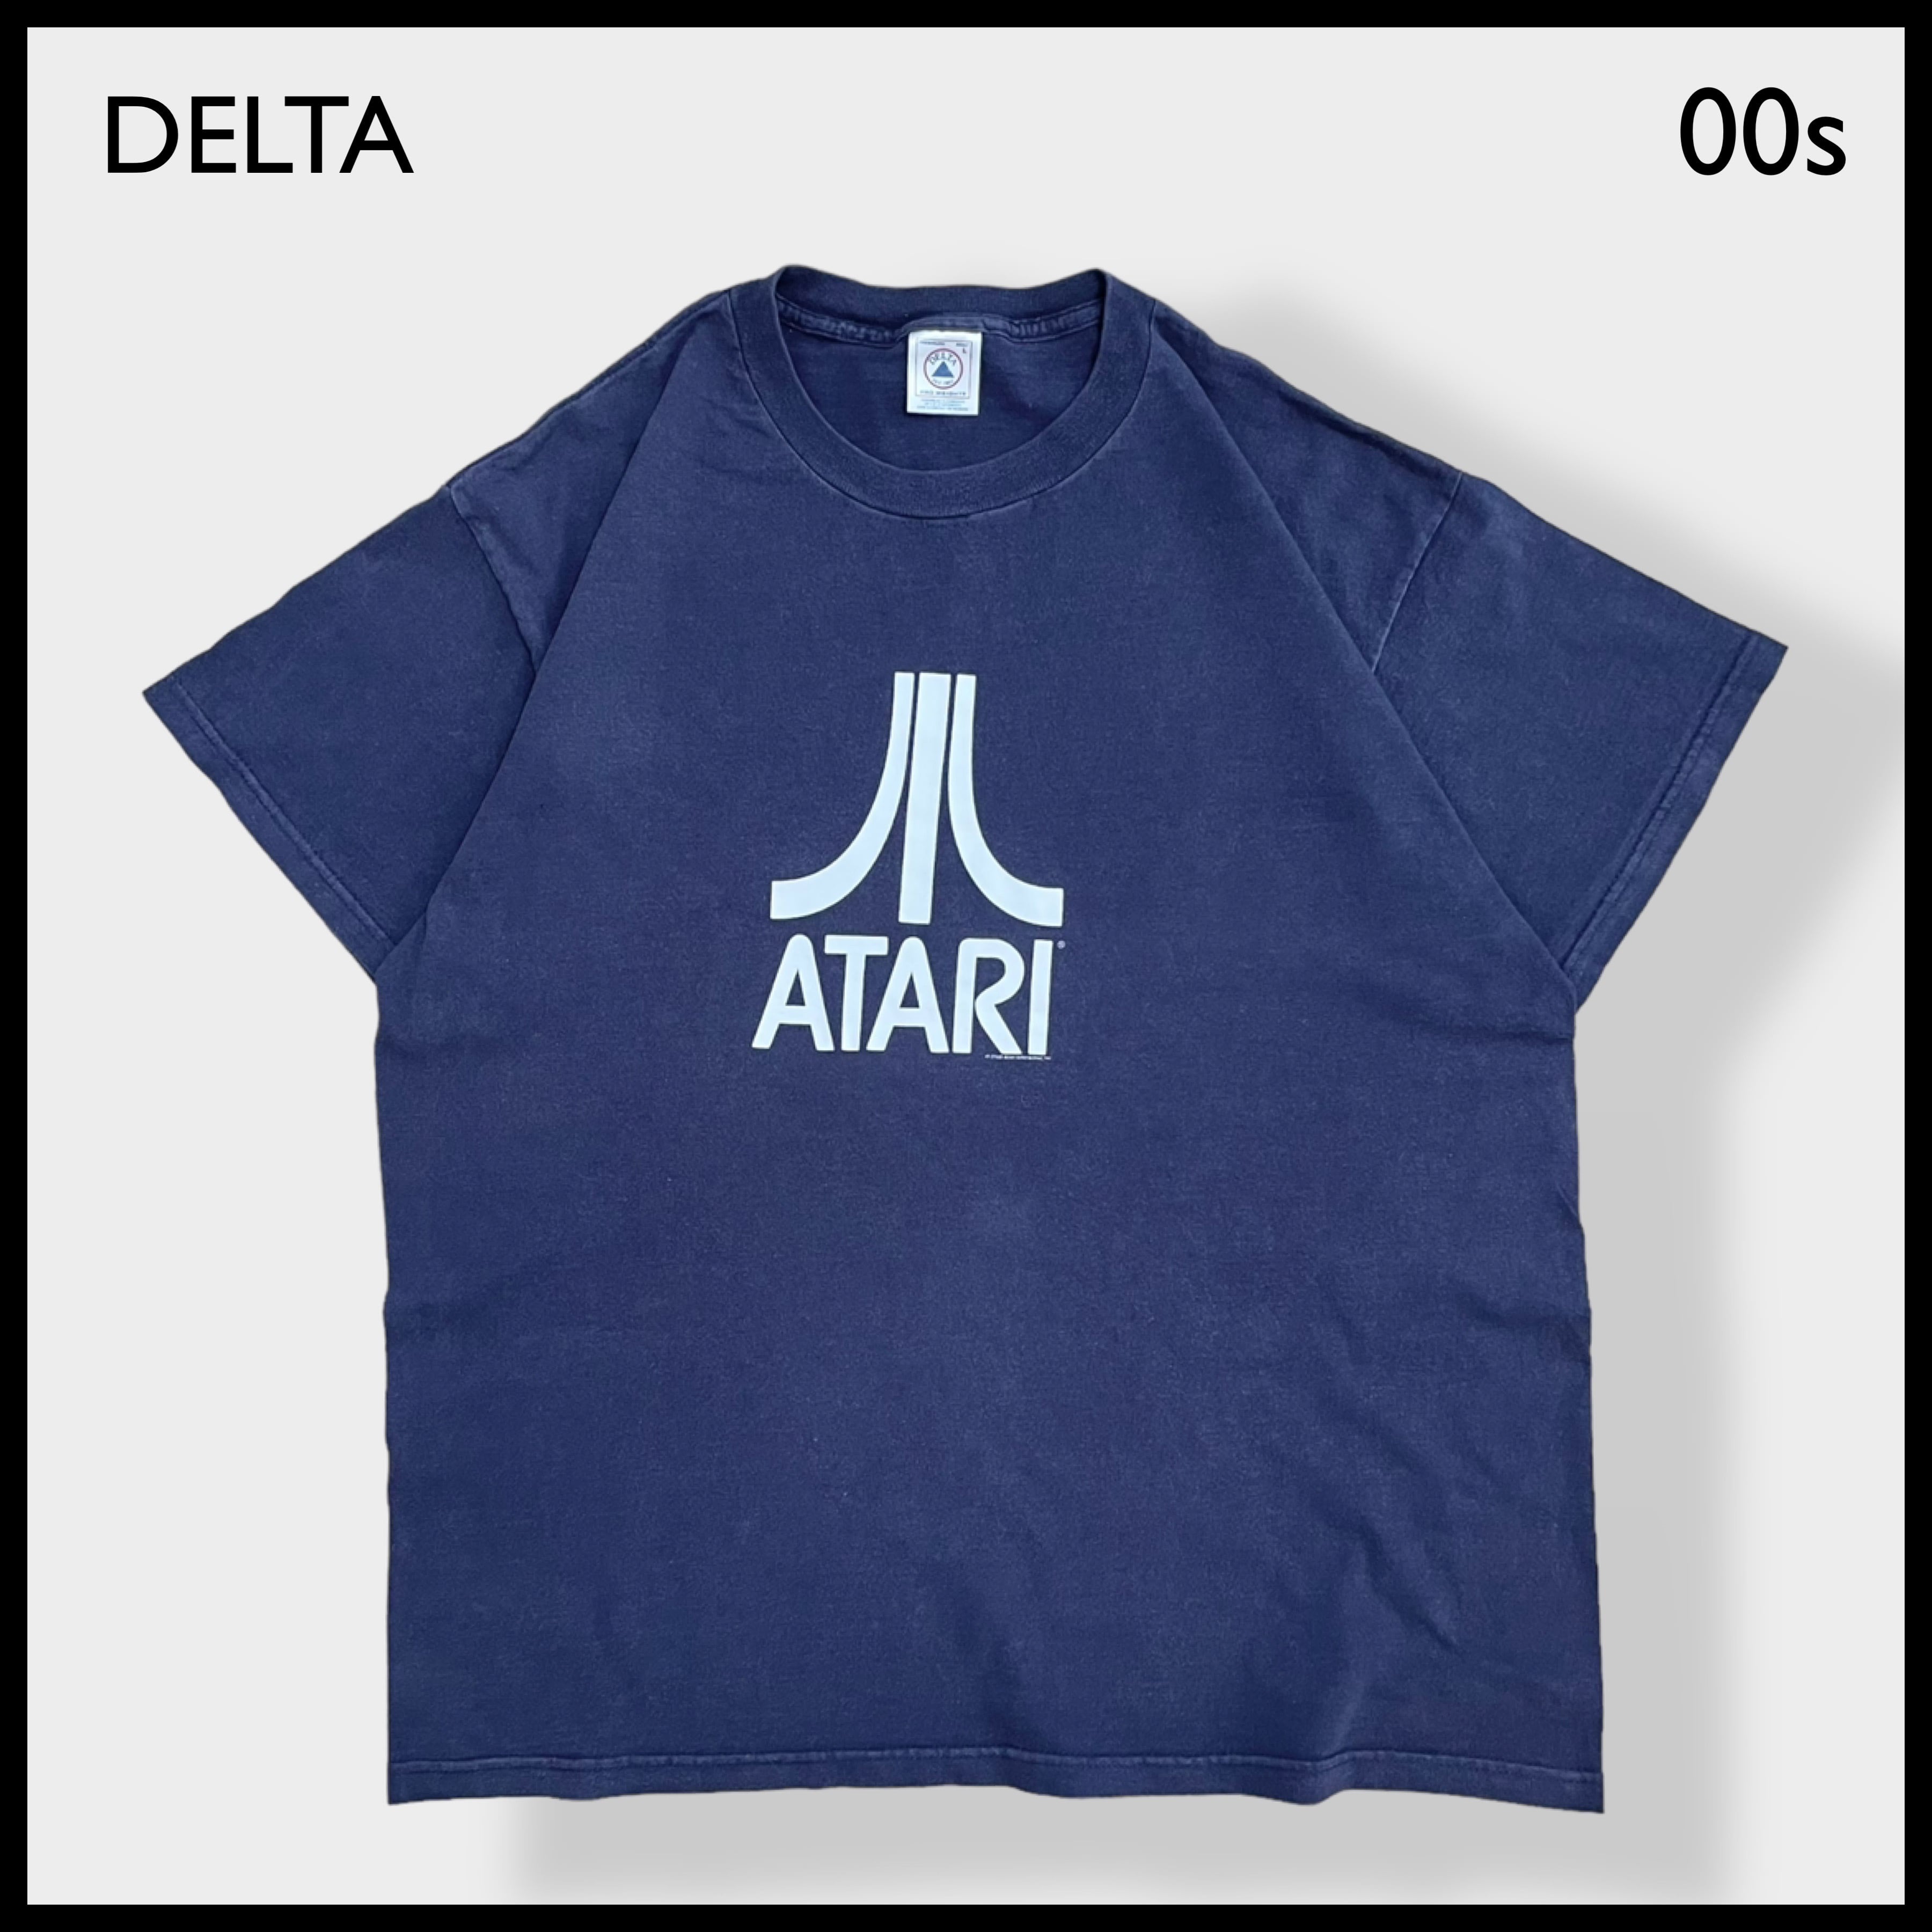 DELTA】00s USA製 ATARI 企業系 企業ロゴ アタリ ビデオゲーム L